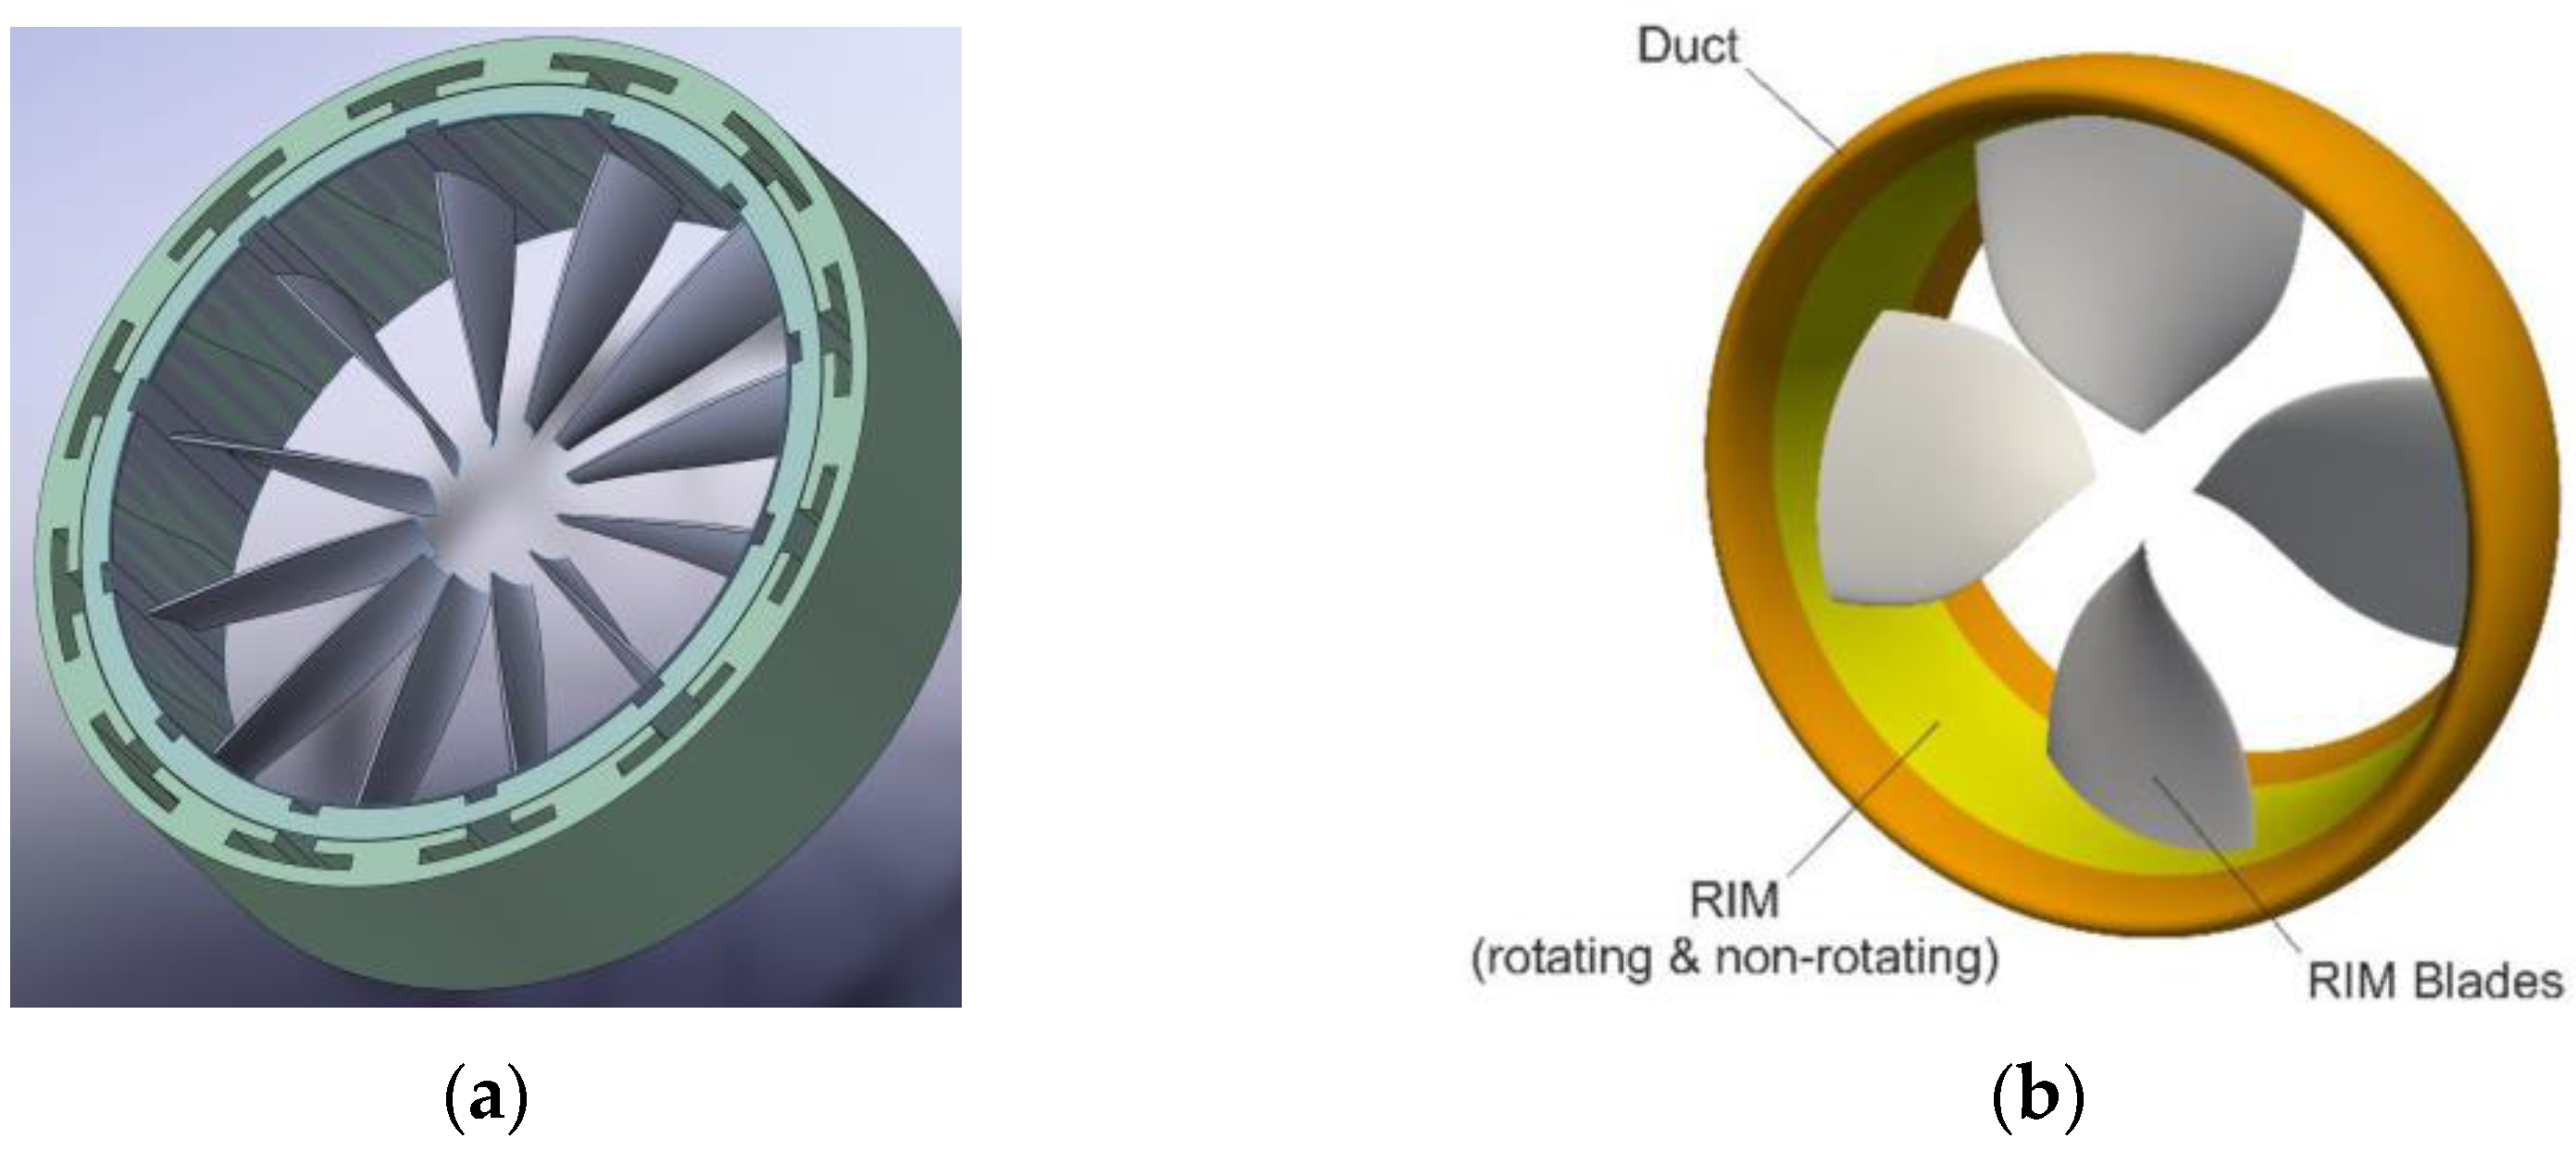 DE202008016578U1 - Manipulator for mounting rotor blades of a wind turbine  - Google Patents